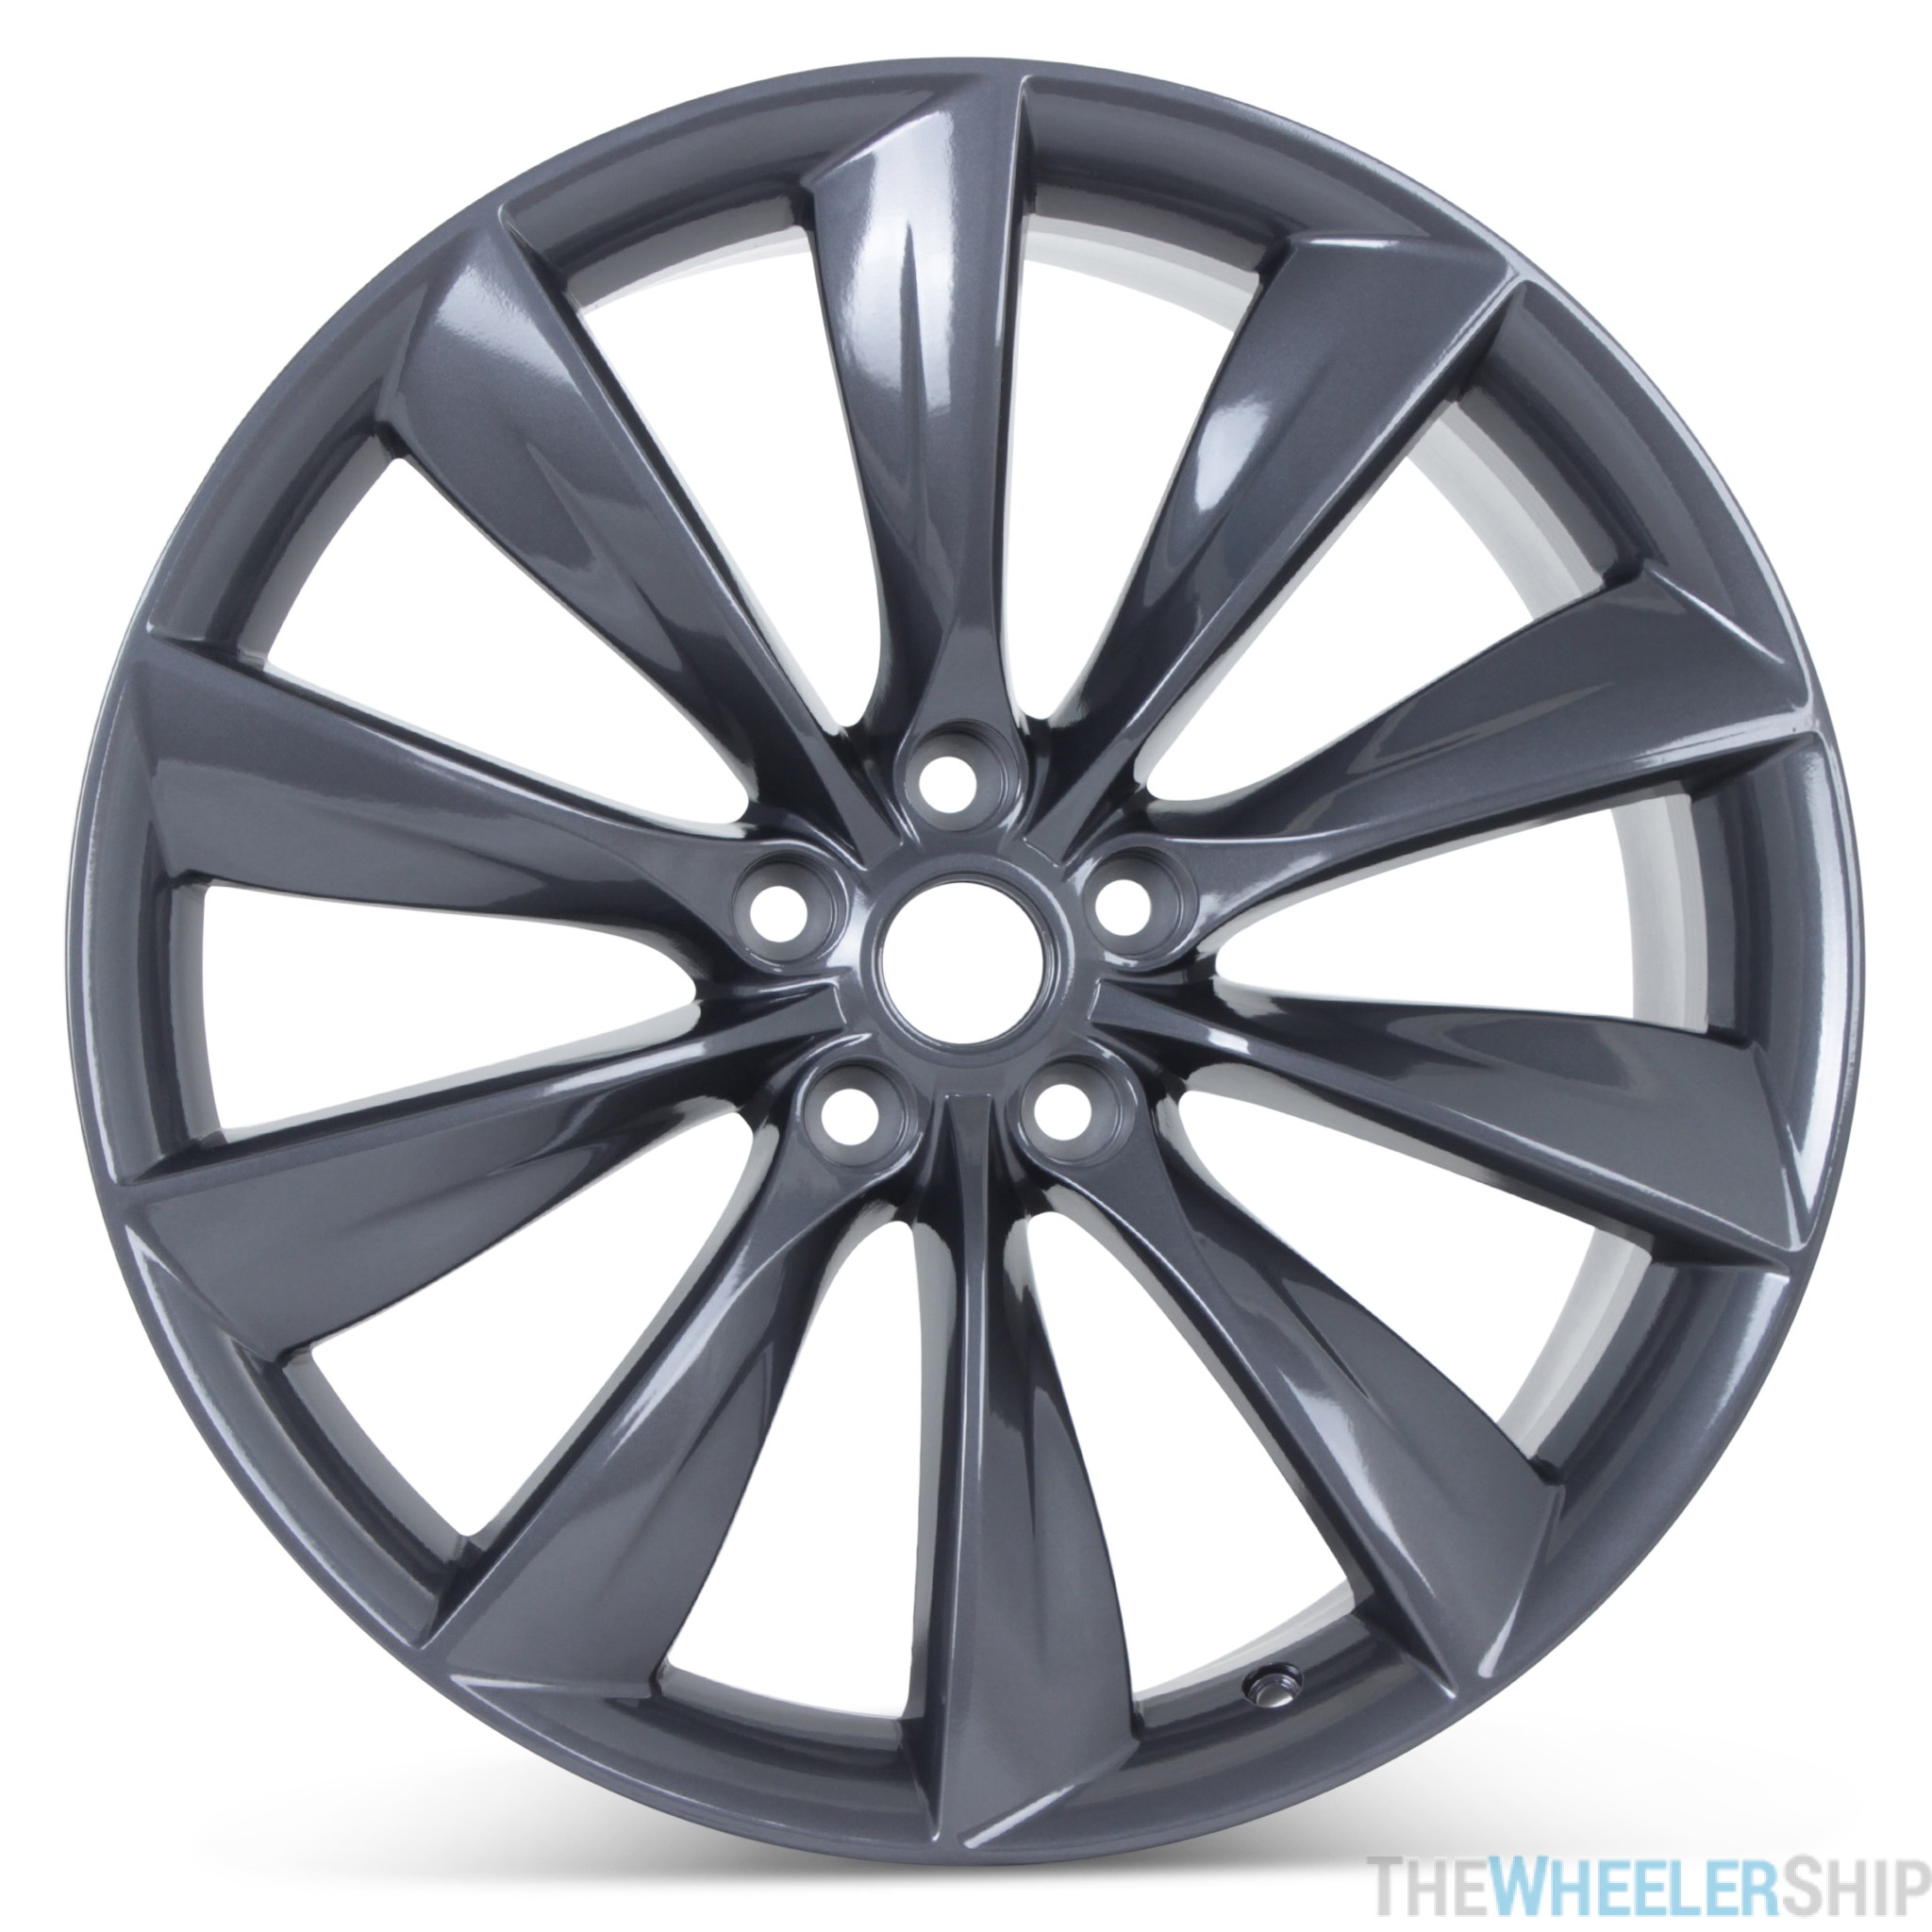 New 21 X 9 Rear Wheel For Tesla Model S 2012 2013 2014 2015 2016 2017 Gray Rim 97095